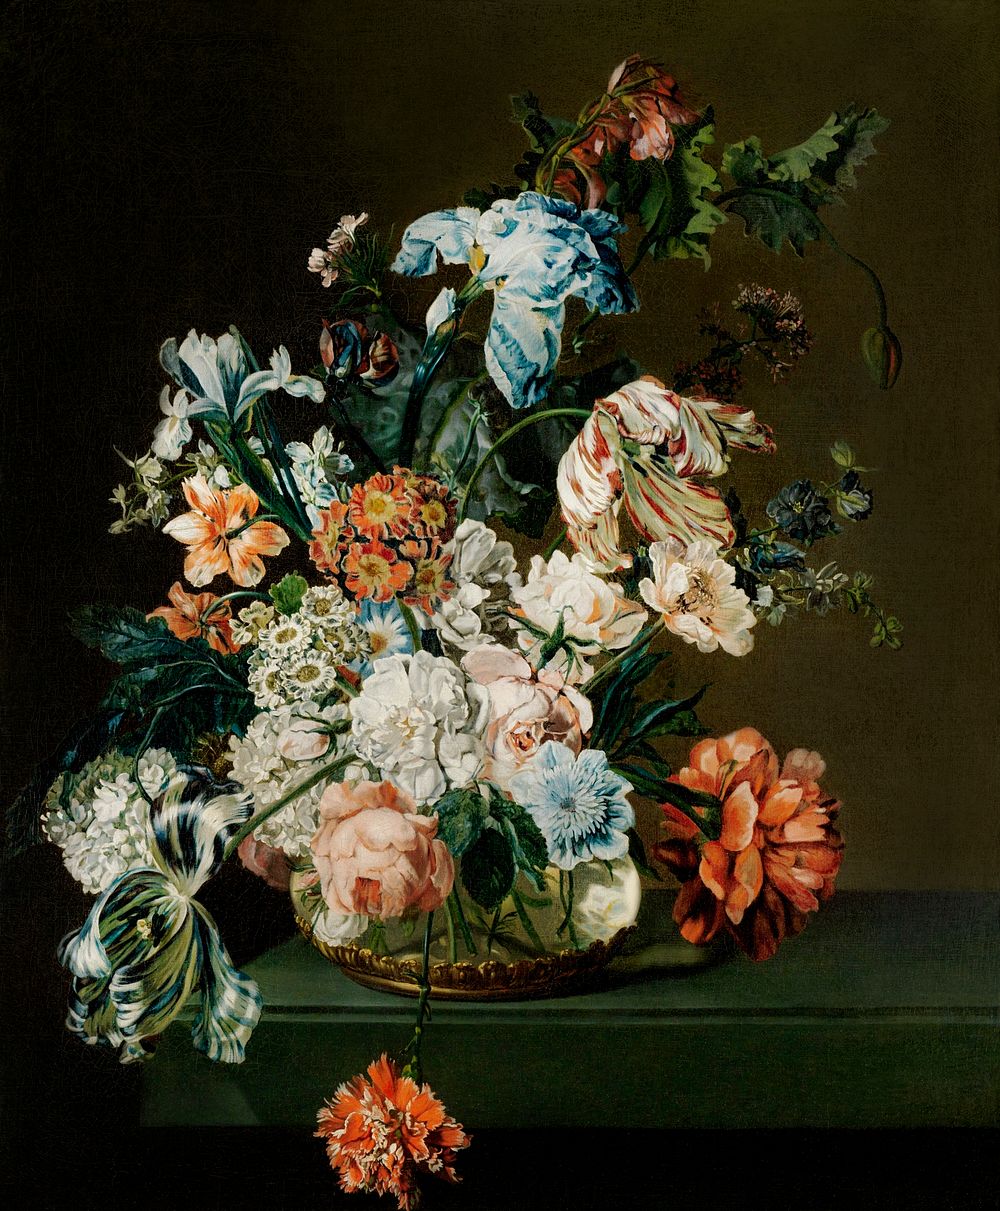 Still Life with Flowers (1762) by Cornelia van der Mijn. Original from The Rijksmuseum. Digitally enhanced by rawpixel.